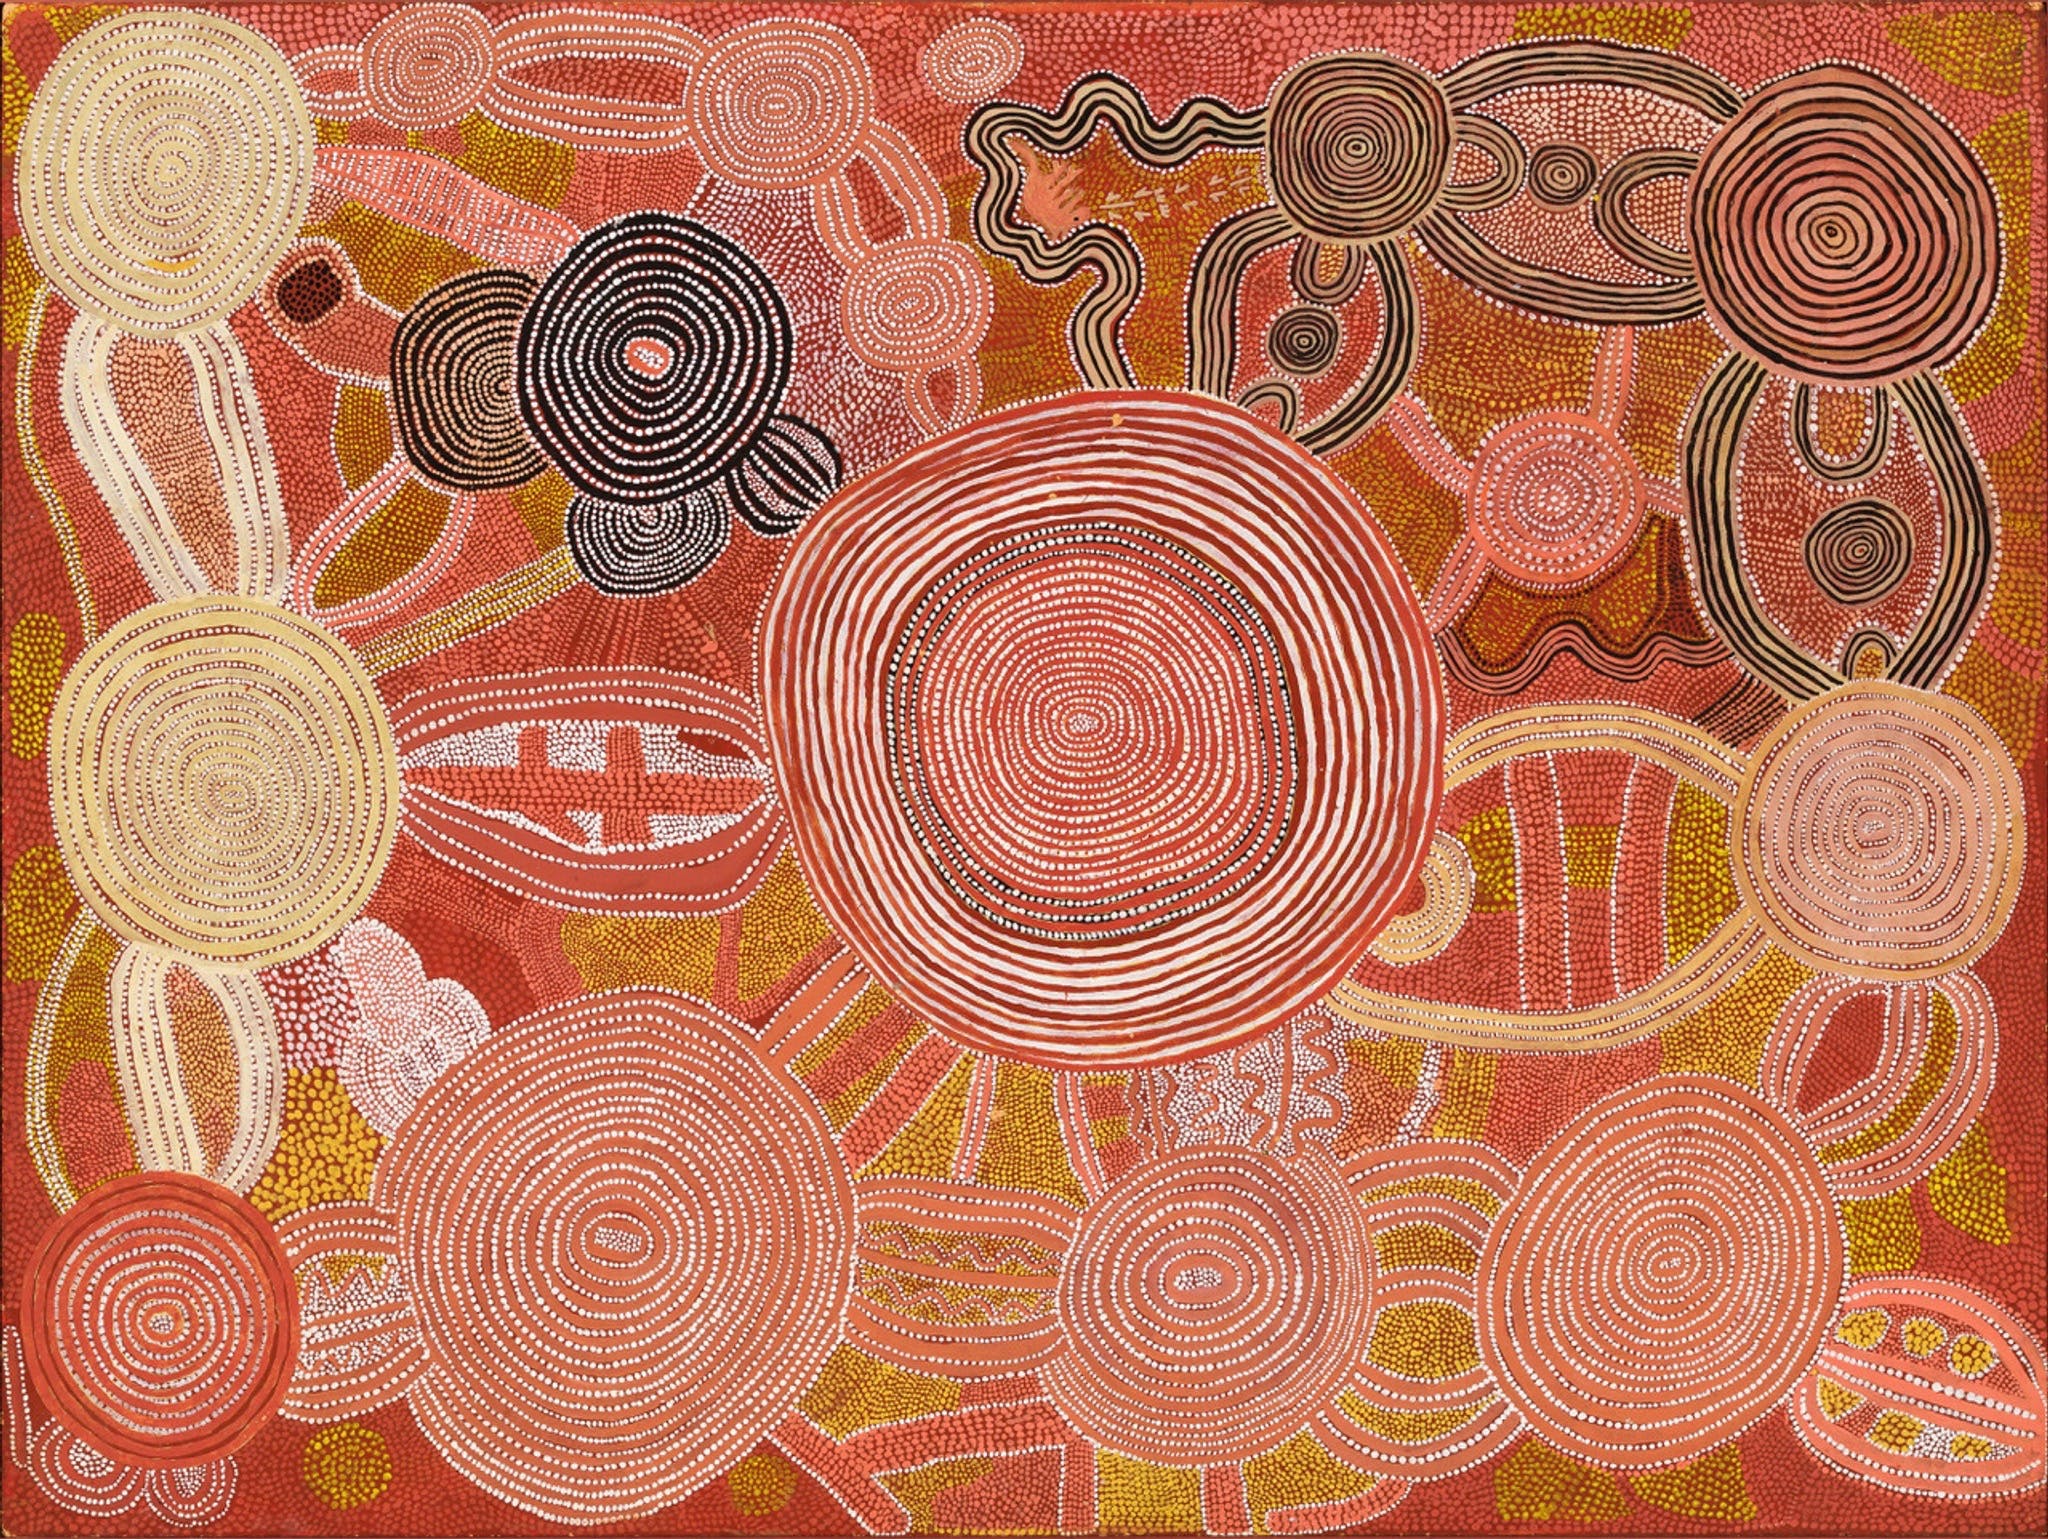 Reverence Exhibition of Australian Indigenous Art - Tourism Canberra